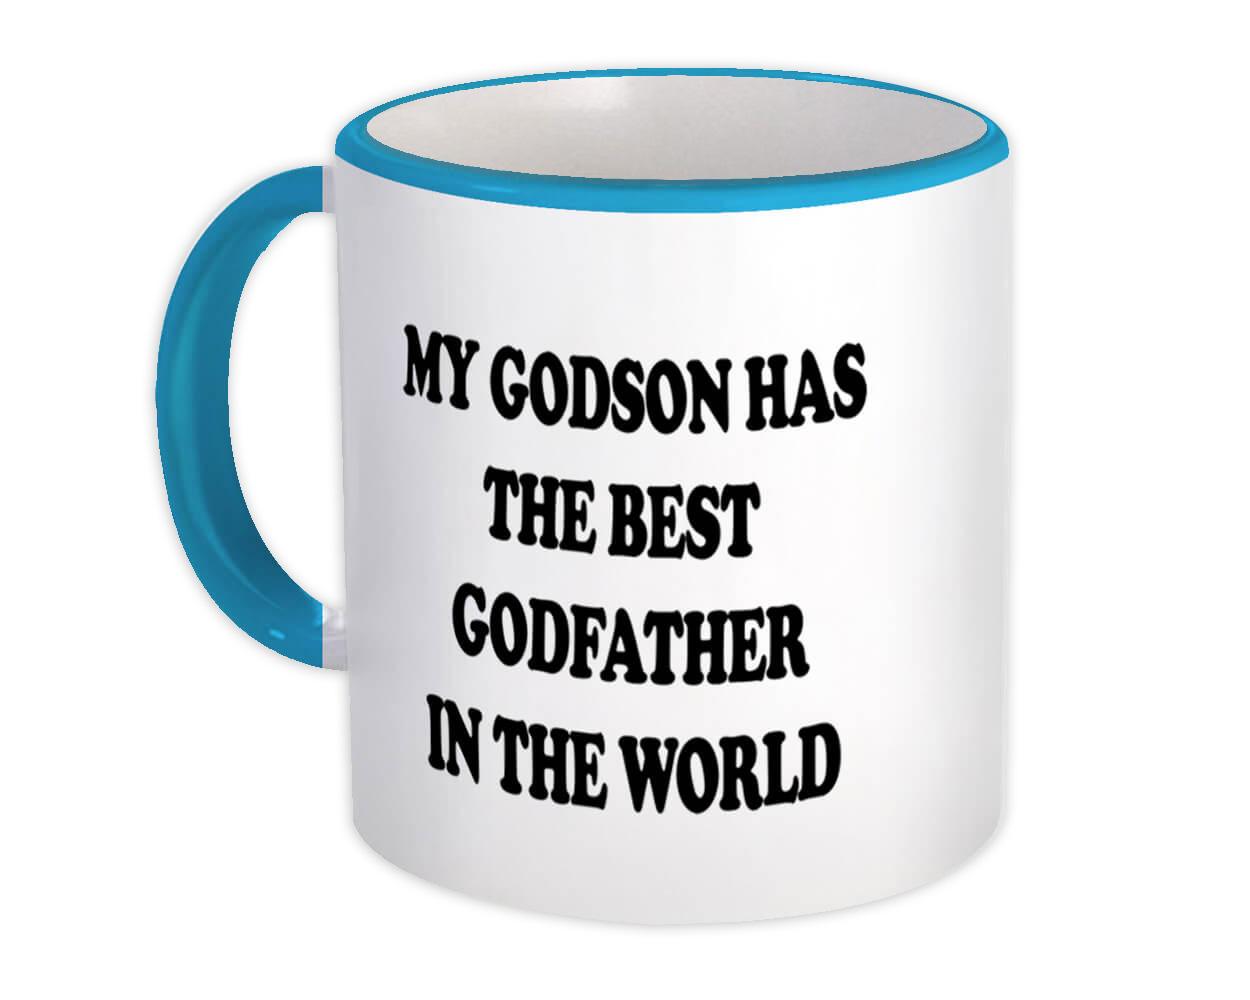 Details about   My Favorite Godson Gave Me This Mug Mug Godfather Mug Godfather Gift Gifts 